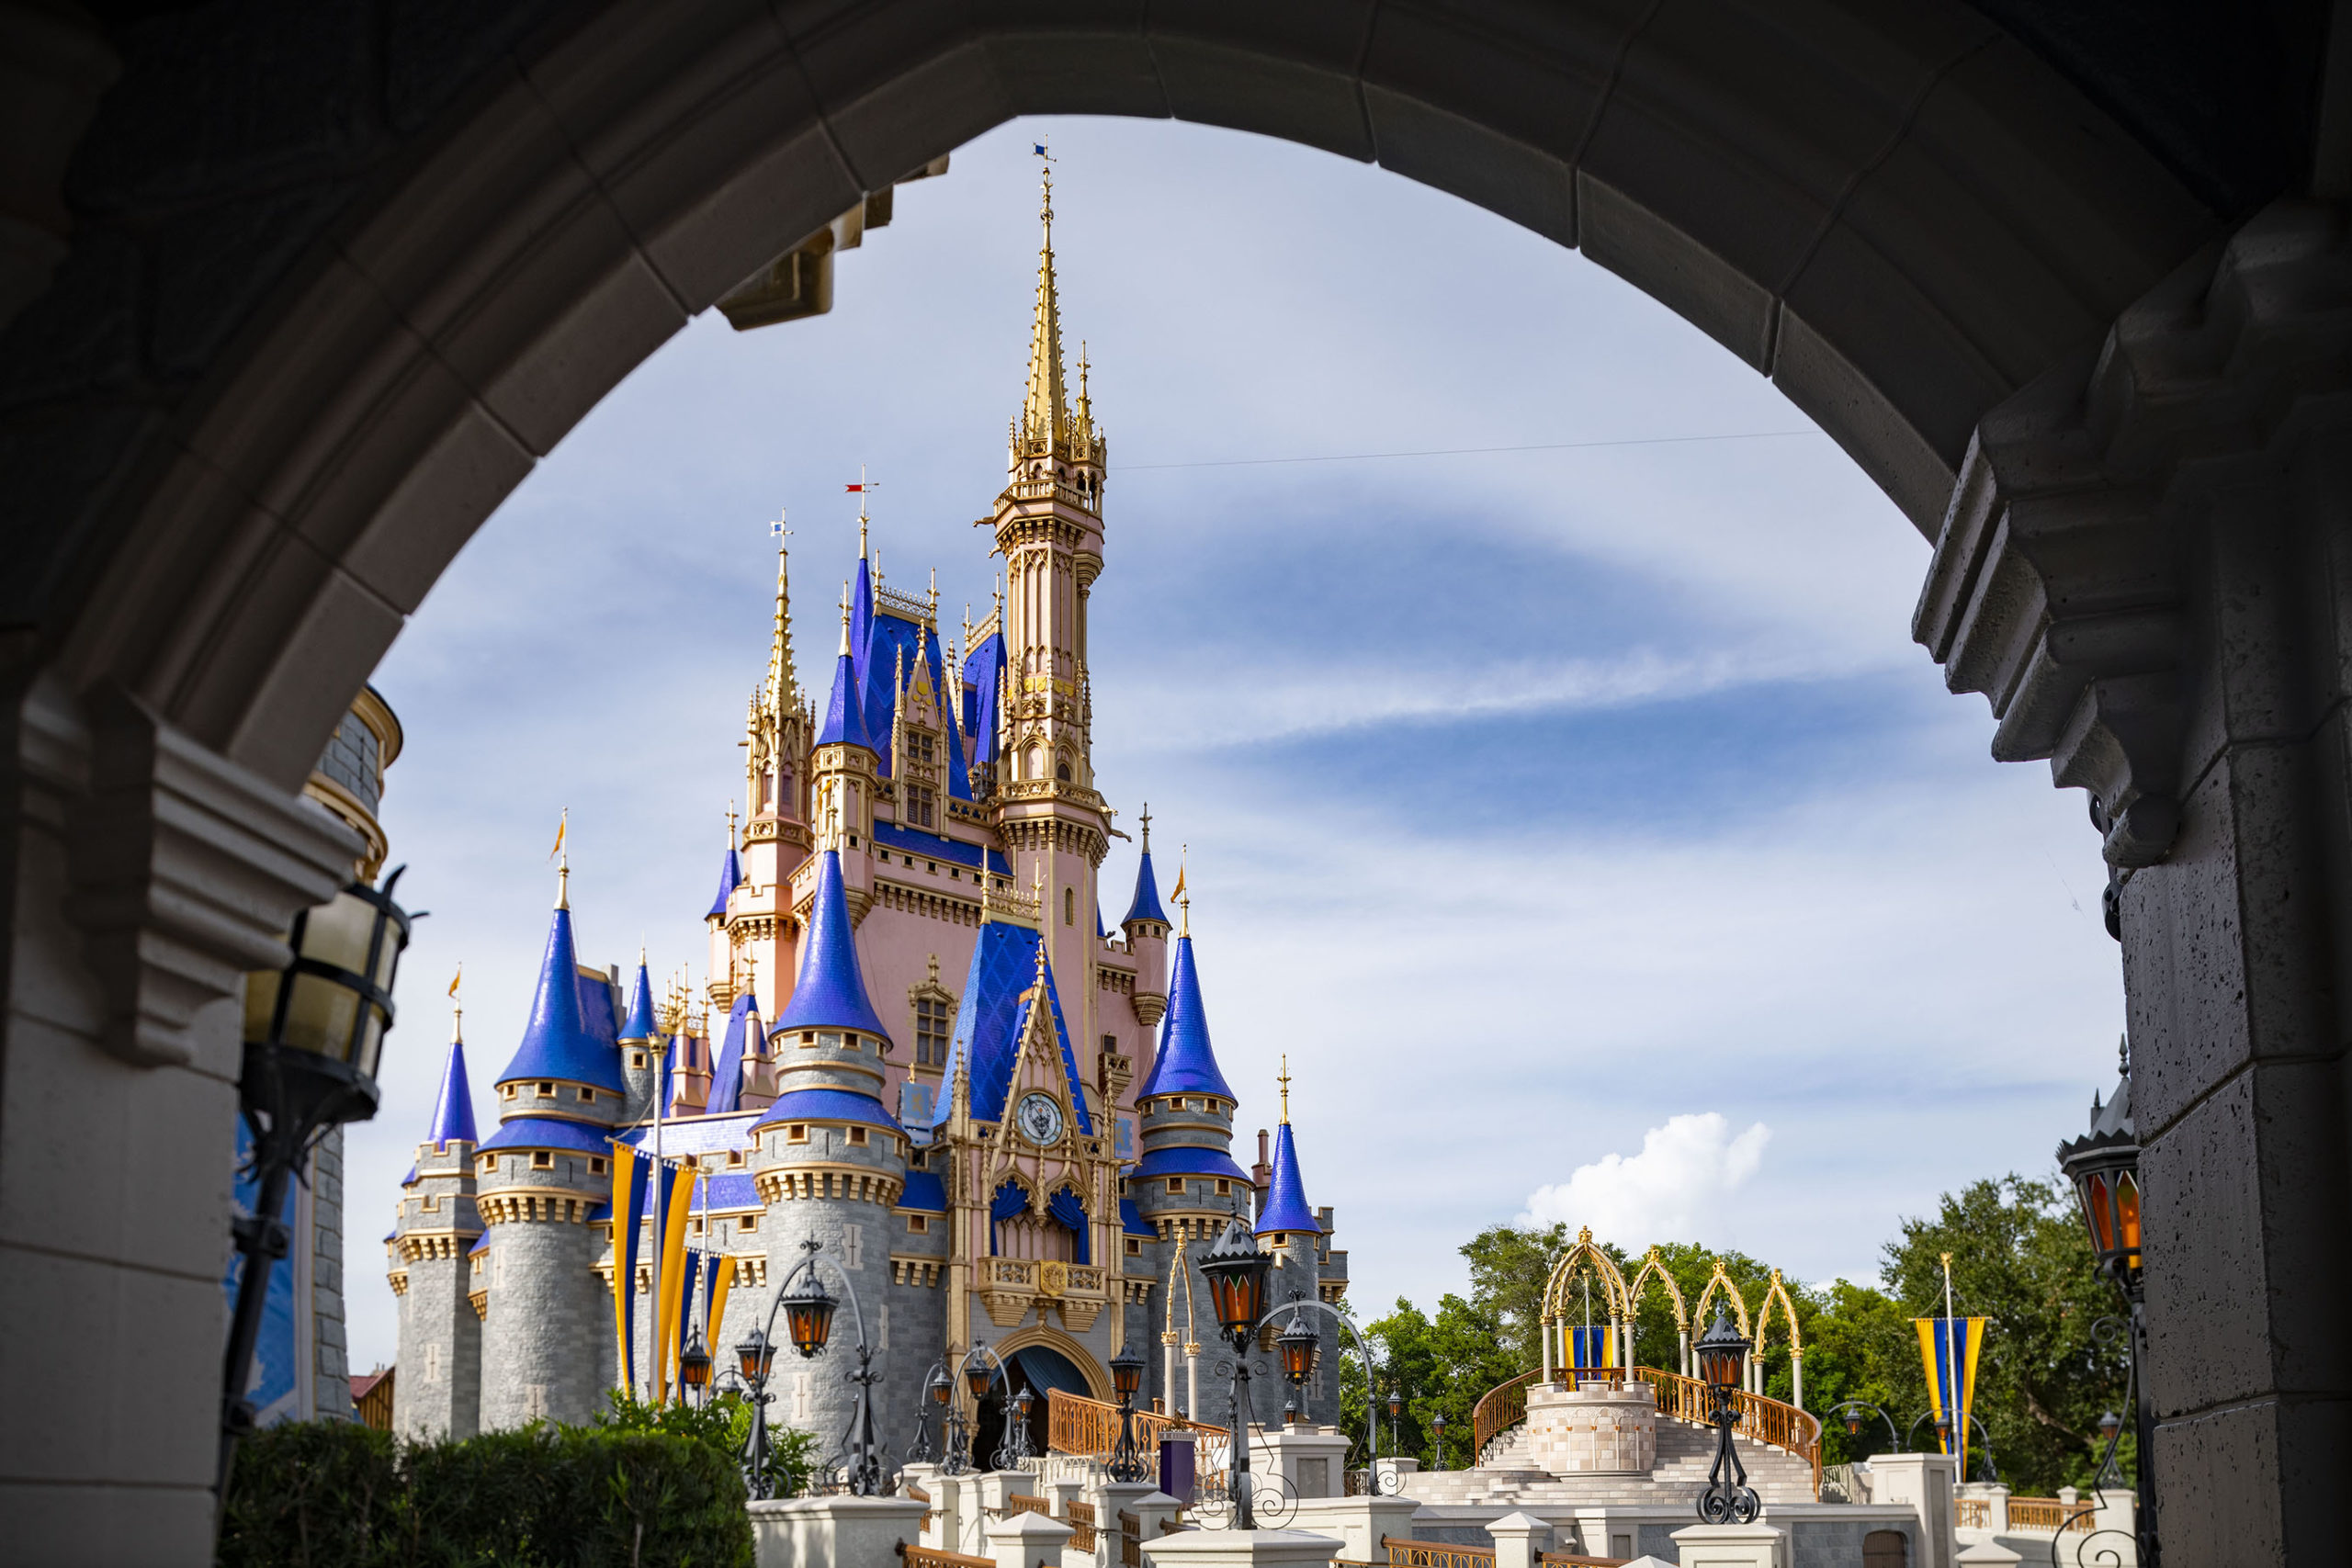 Park Hopping Returns to Walt Disney World January 1, 2021 With